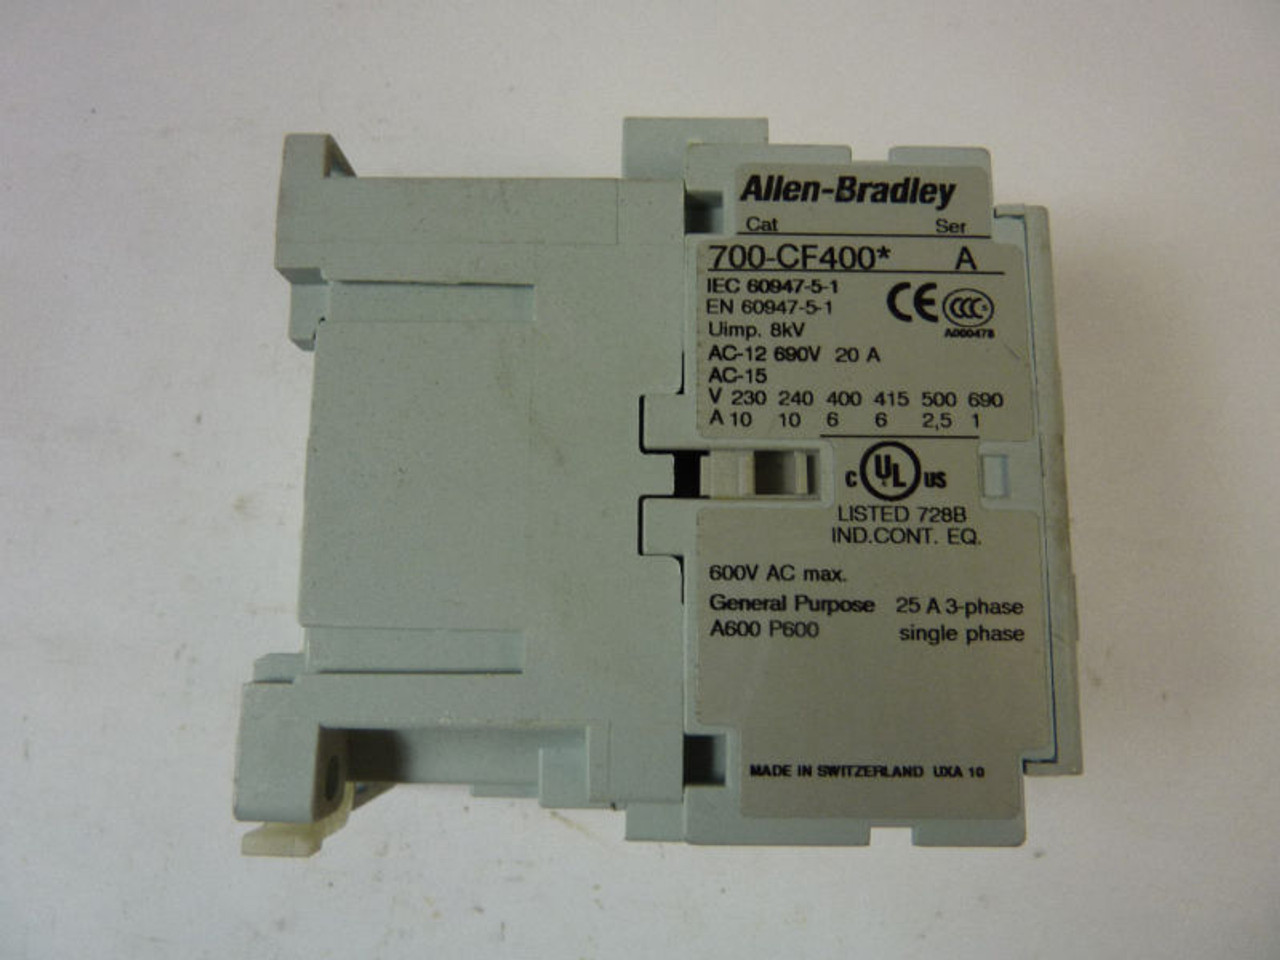 Allen-Bradley 700-CF400D Control Relay 25A 110/120V AC-12 690V 20A USED